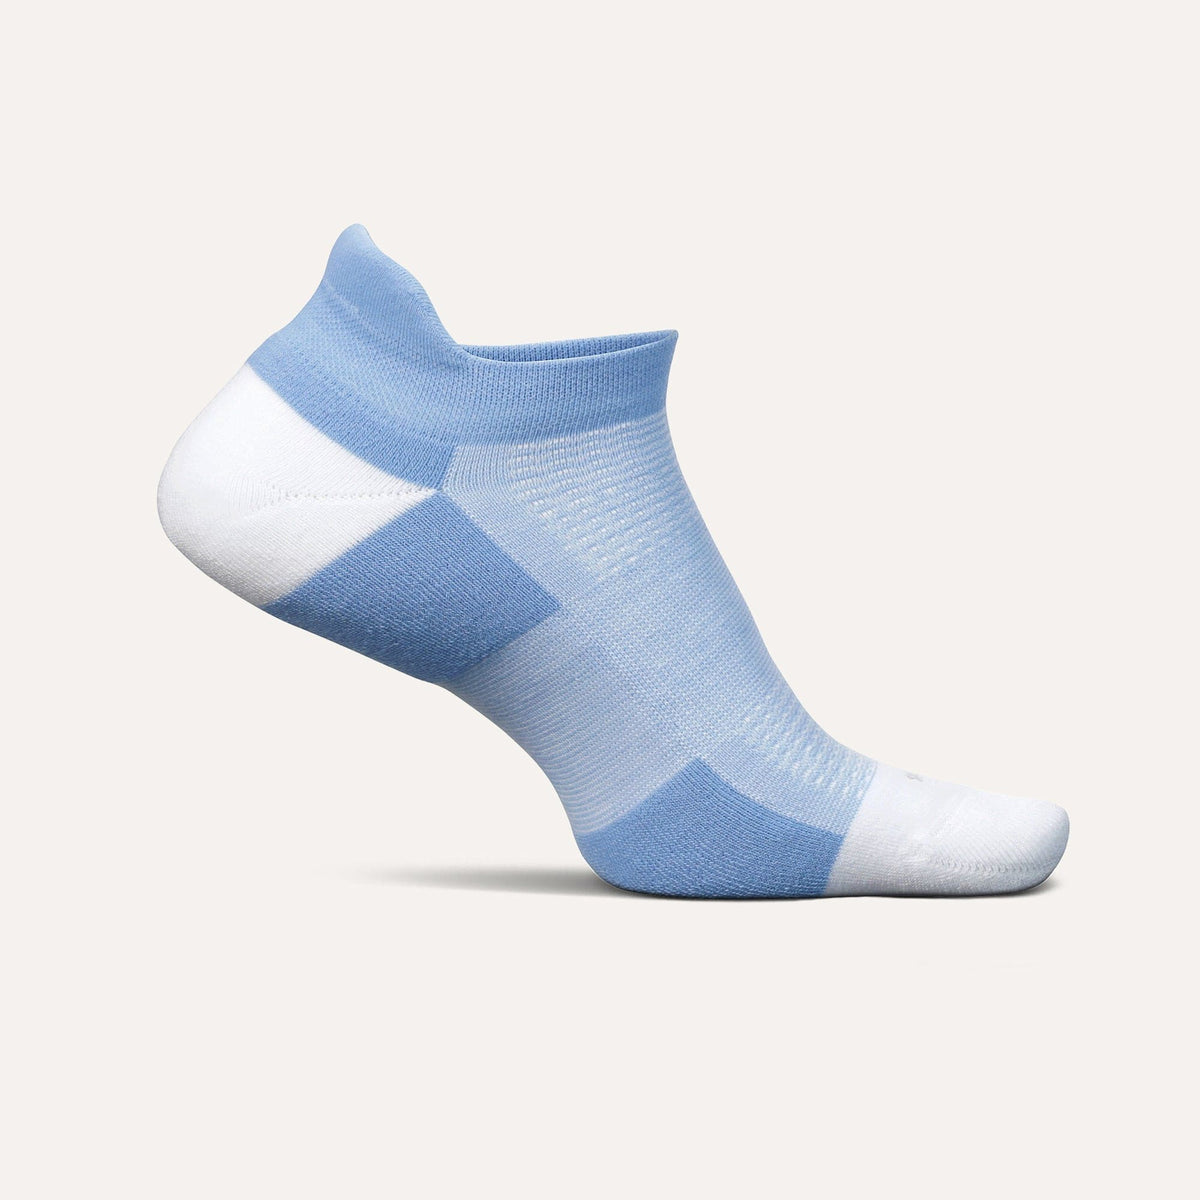 Feetures Graduated Compression Running Socks Light Cushion Knee